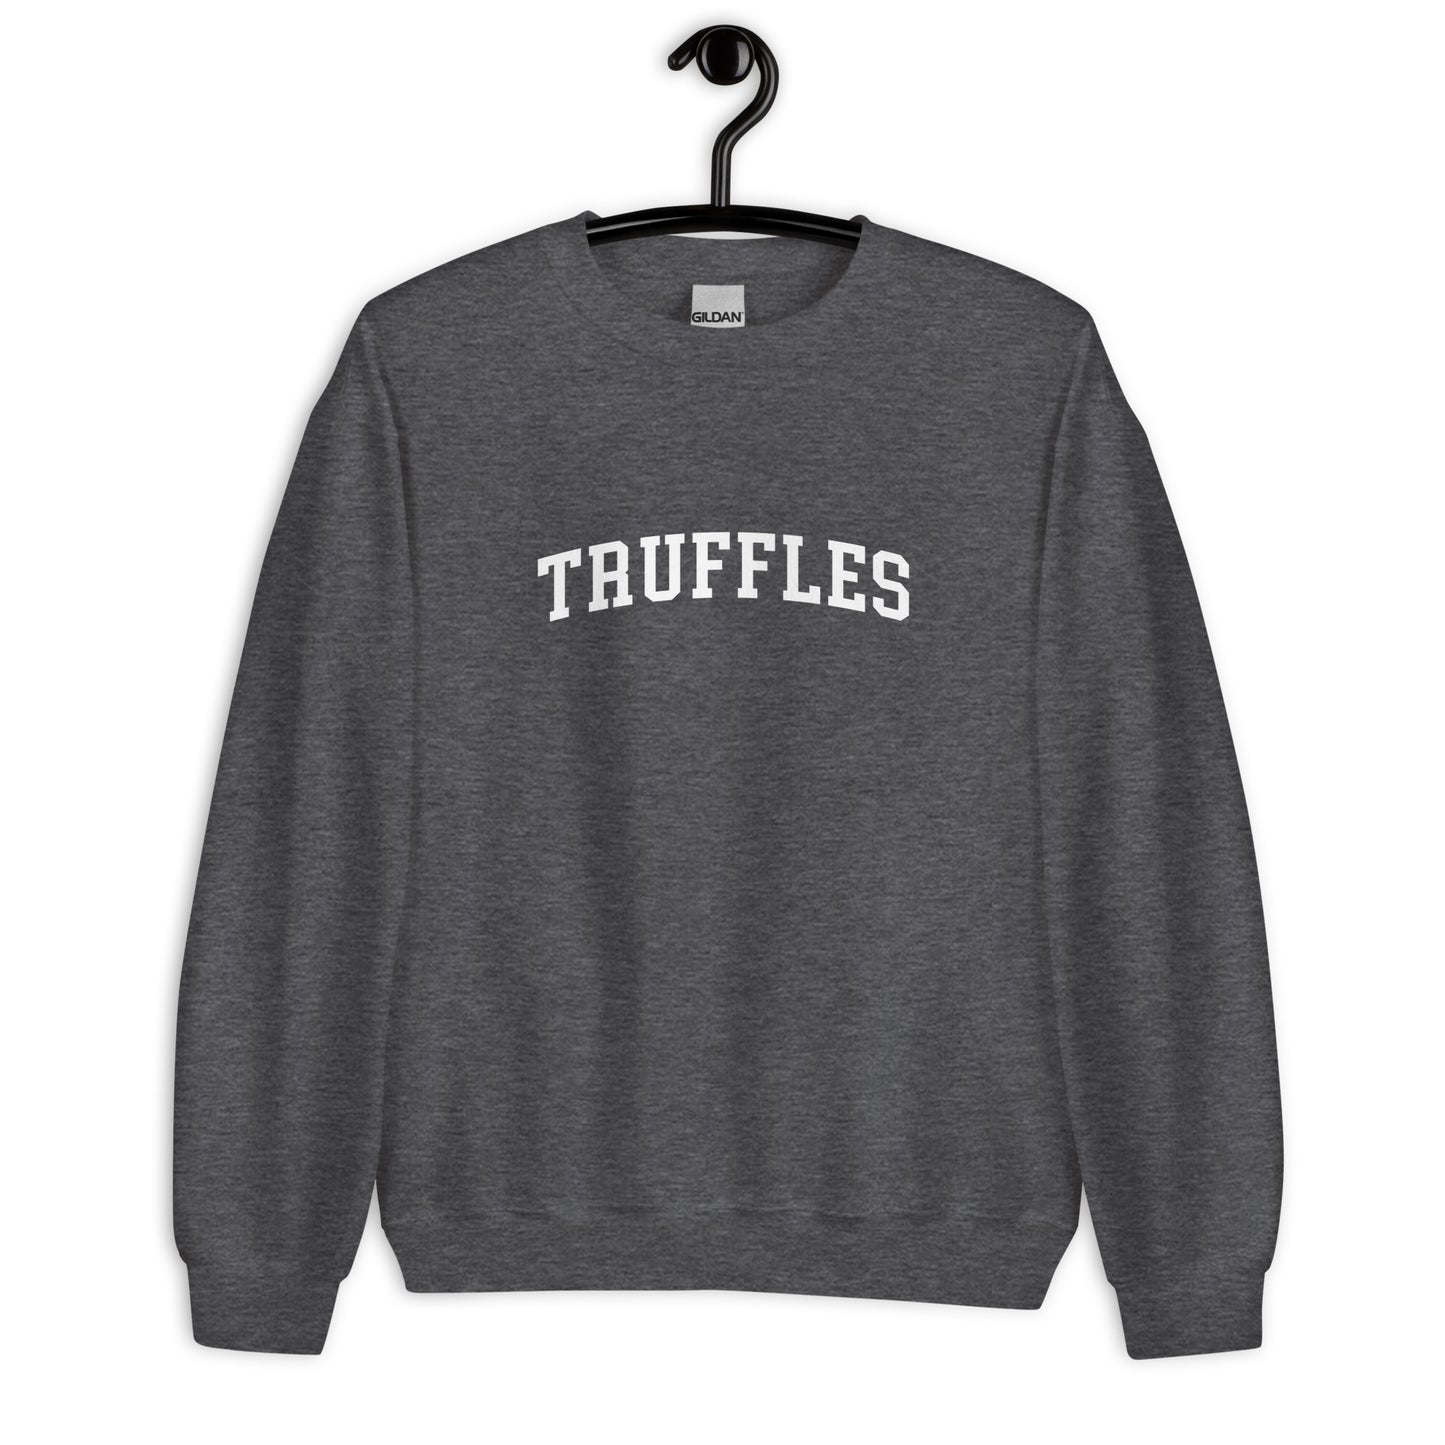 Truffles Sweatshirt - Arched Font